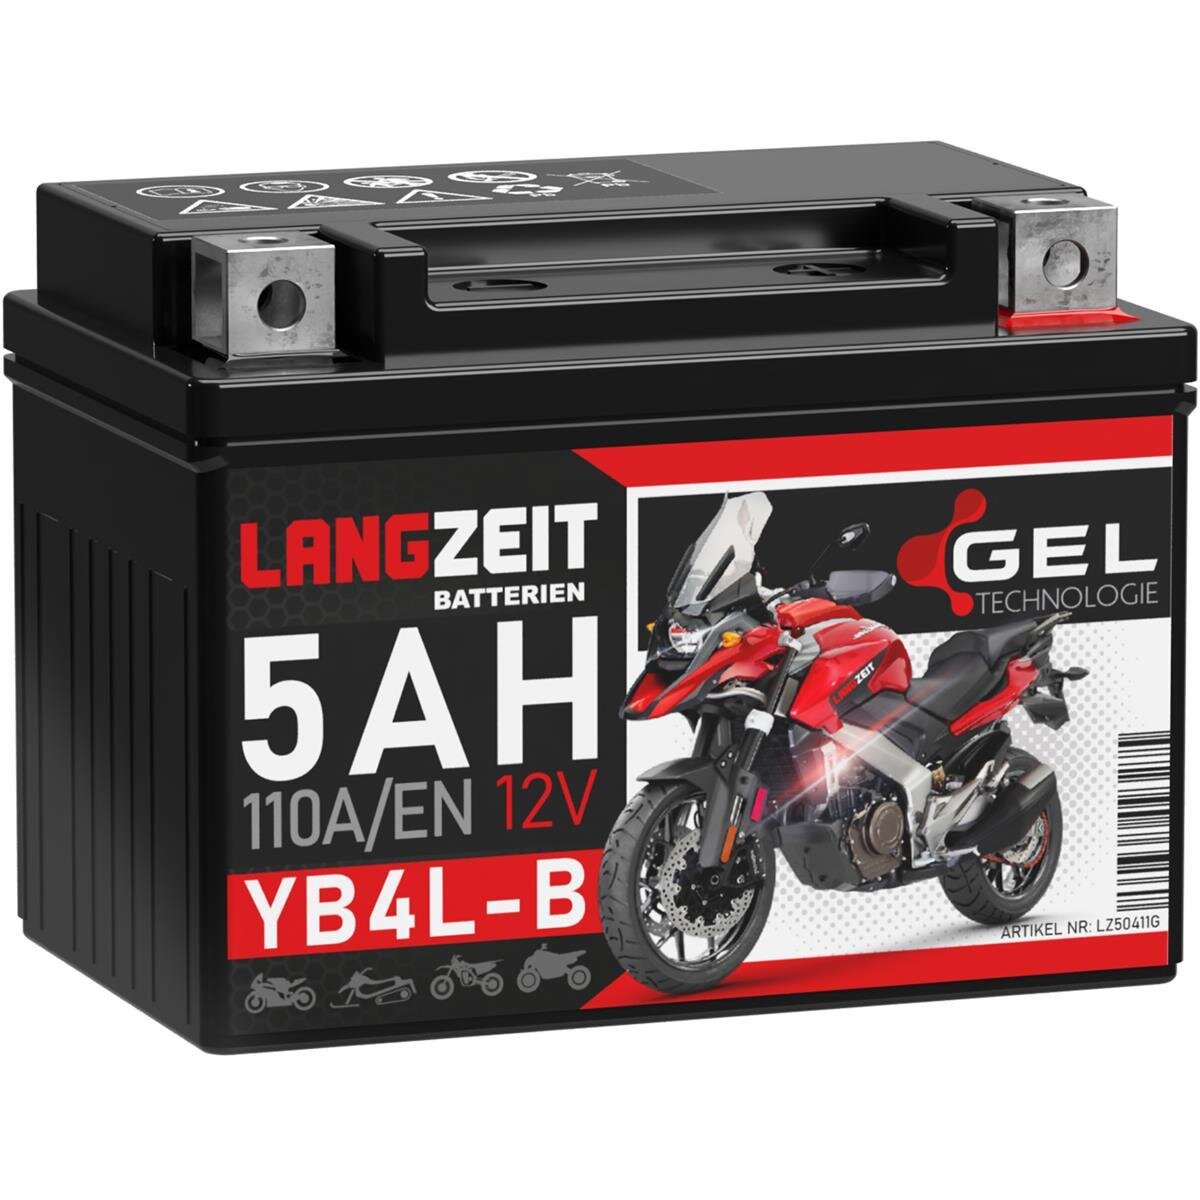 https://www.winnerbatterien.de/media/image/product/5656/lg/langzeit-gel-motorradbatterie-yb4l-b-5ah-12v.jpg